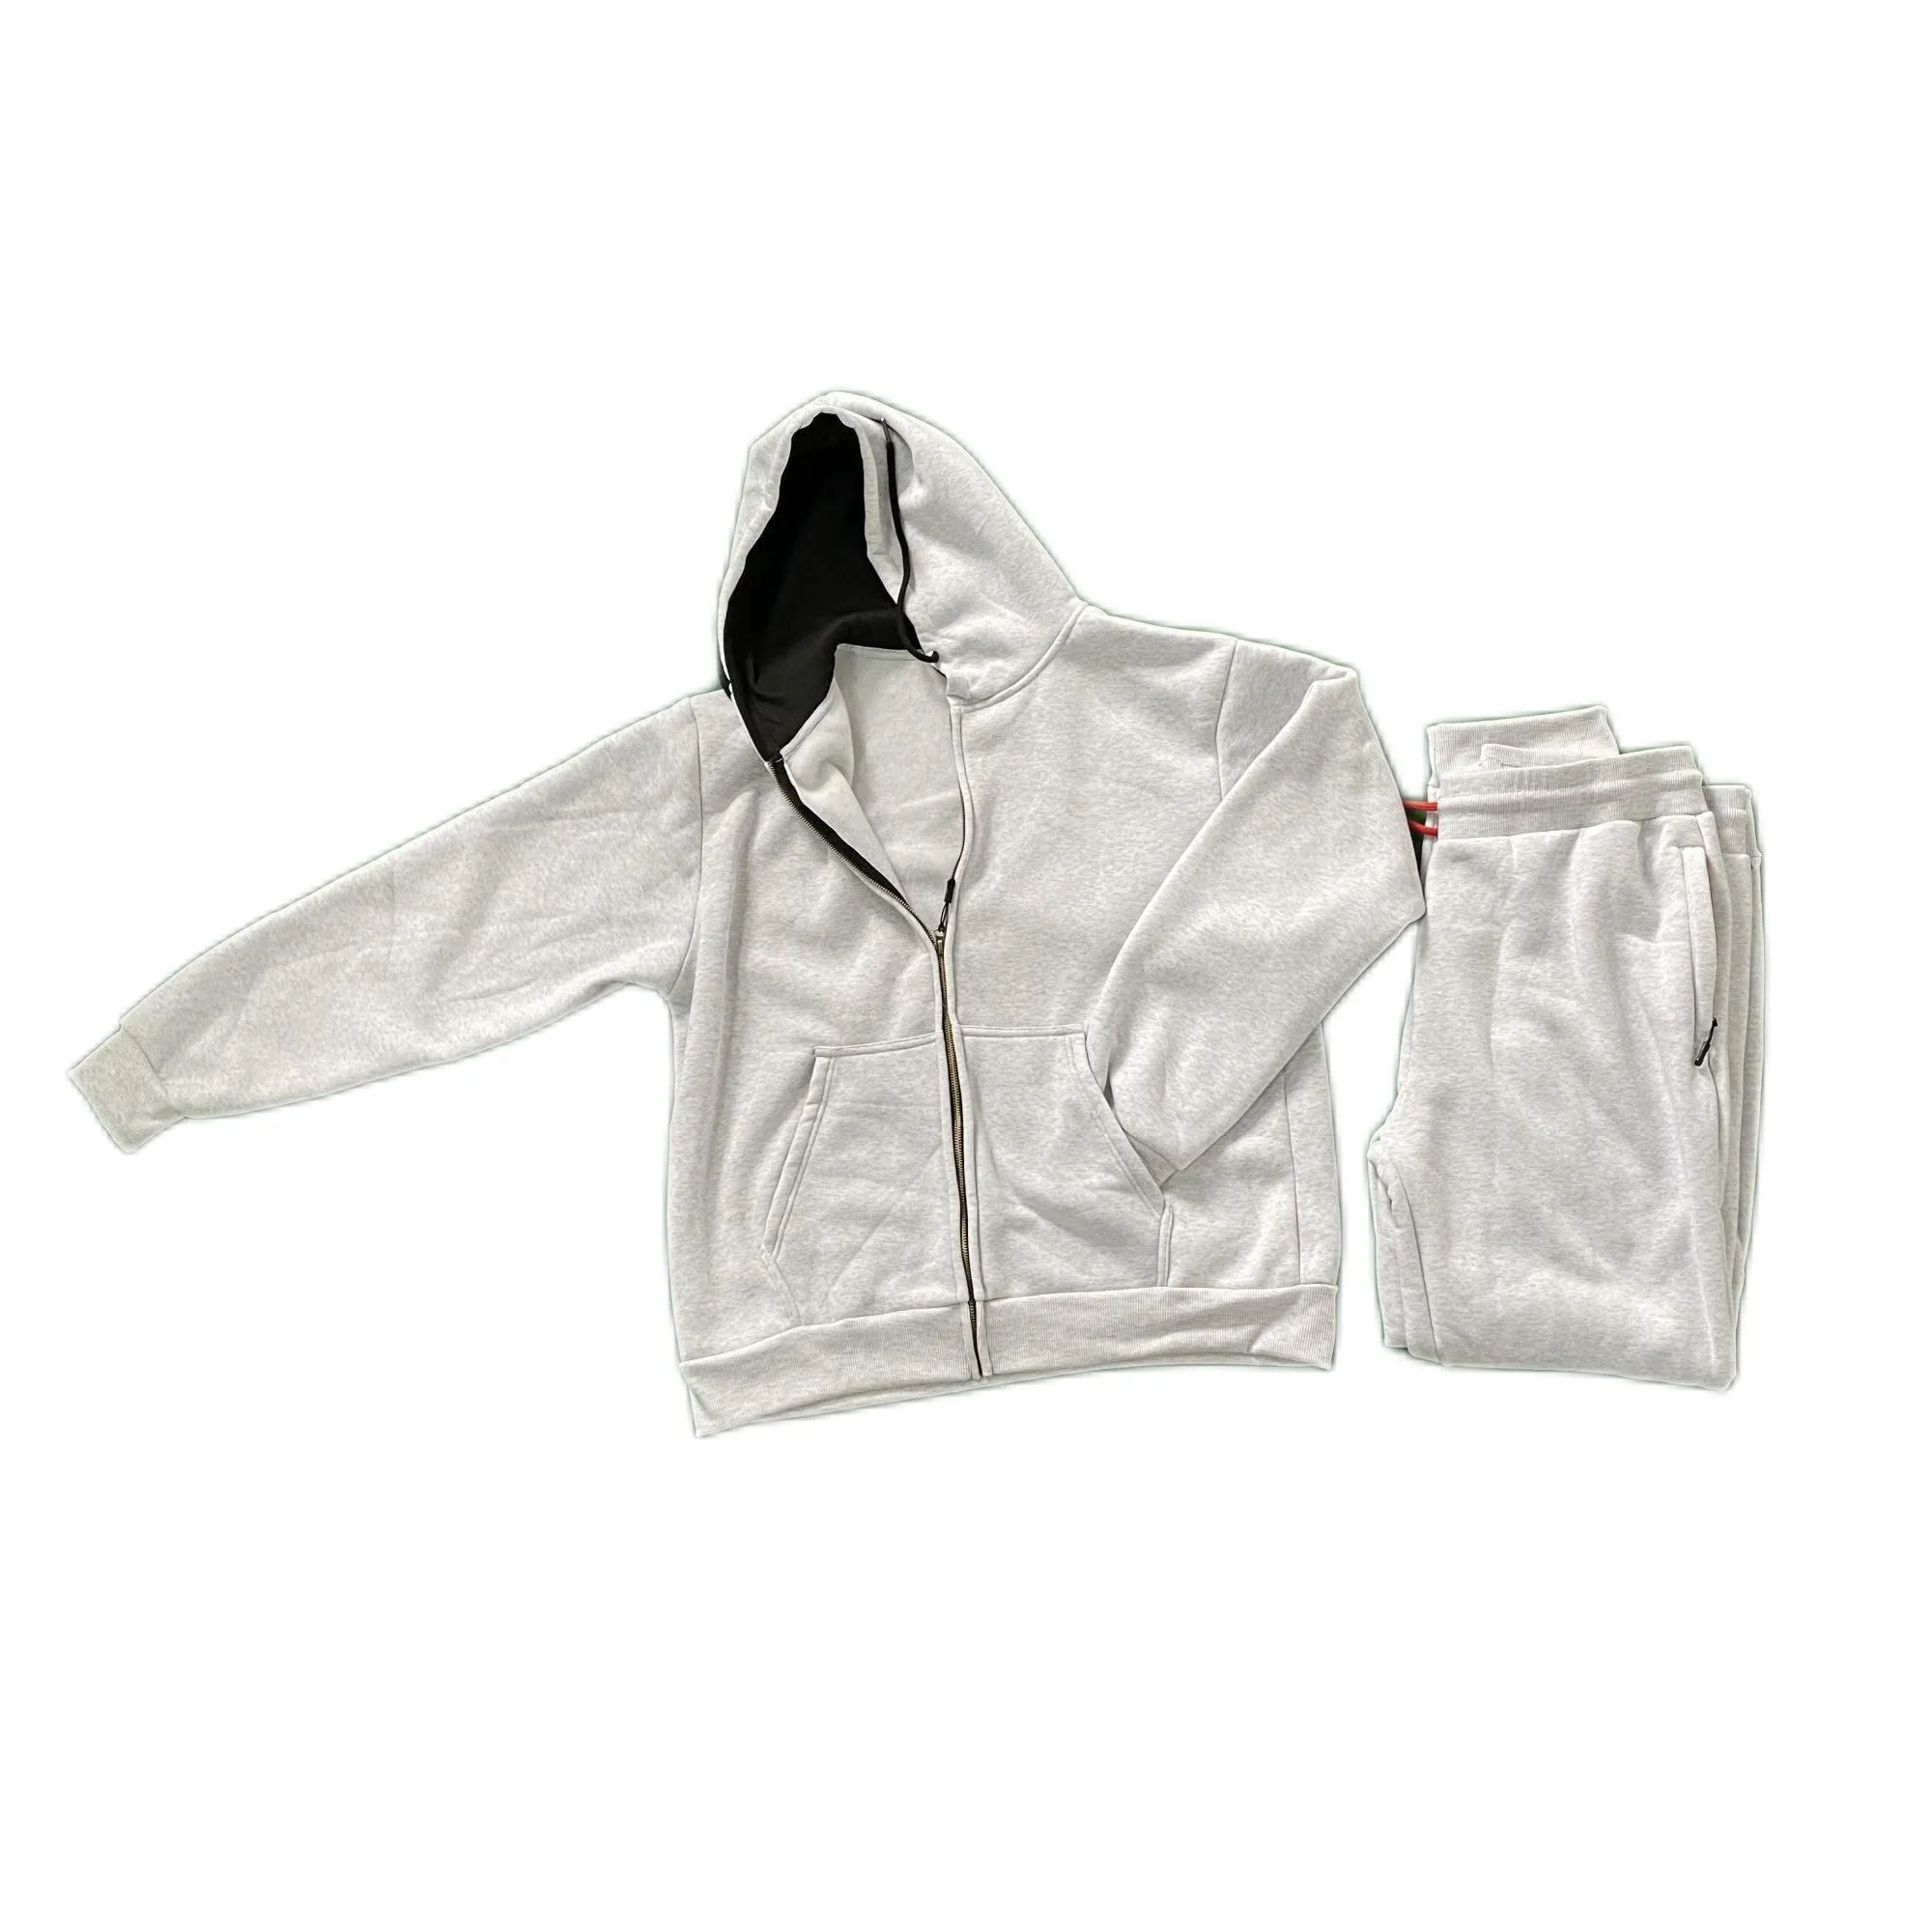 Men's Hoodies RTS Customize 320G Berber Fleece Full Zip Up Sudaderas Hombre High Quality 100% Cotton Cardigan Pocket Hoodies